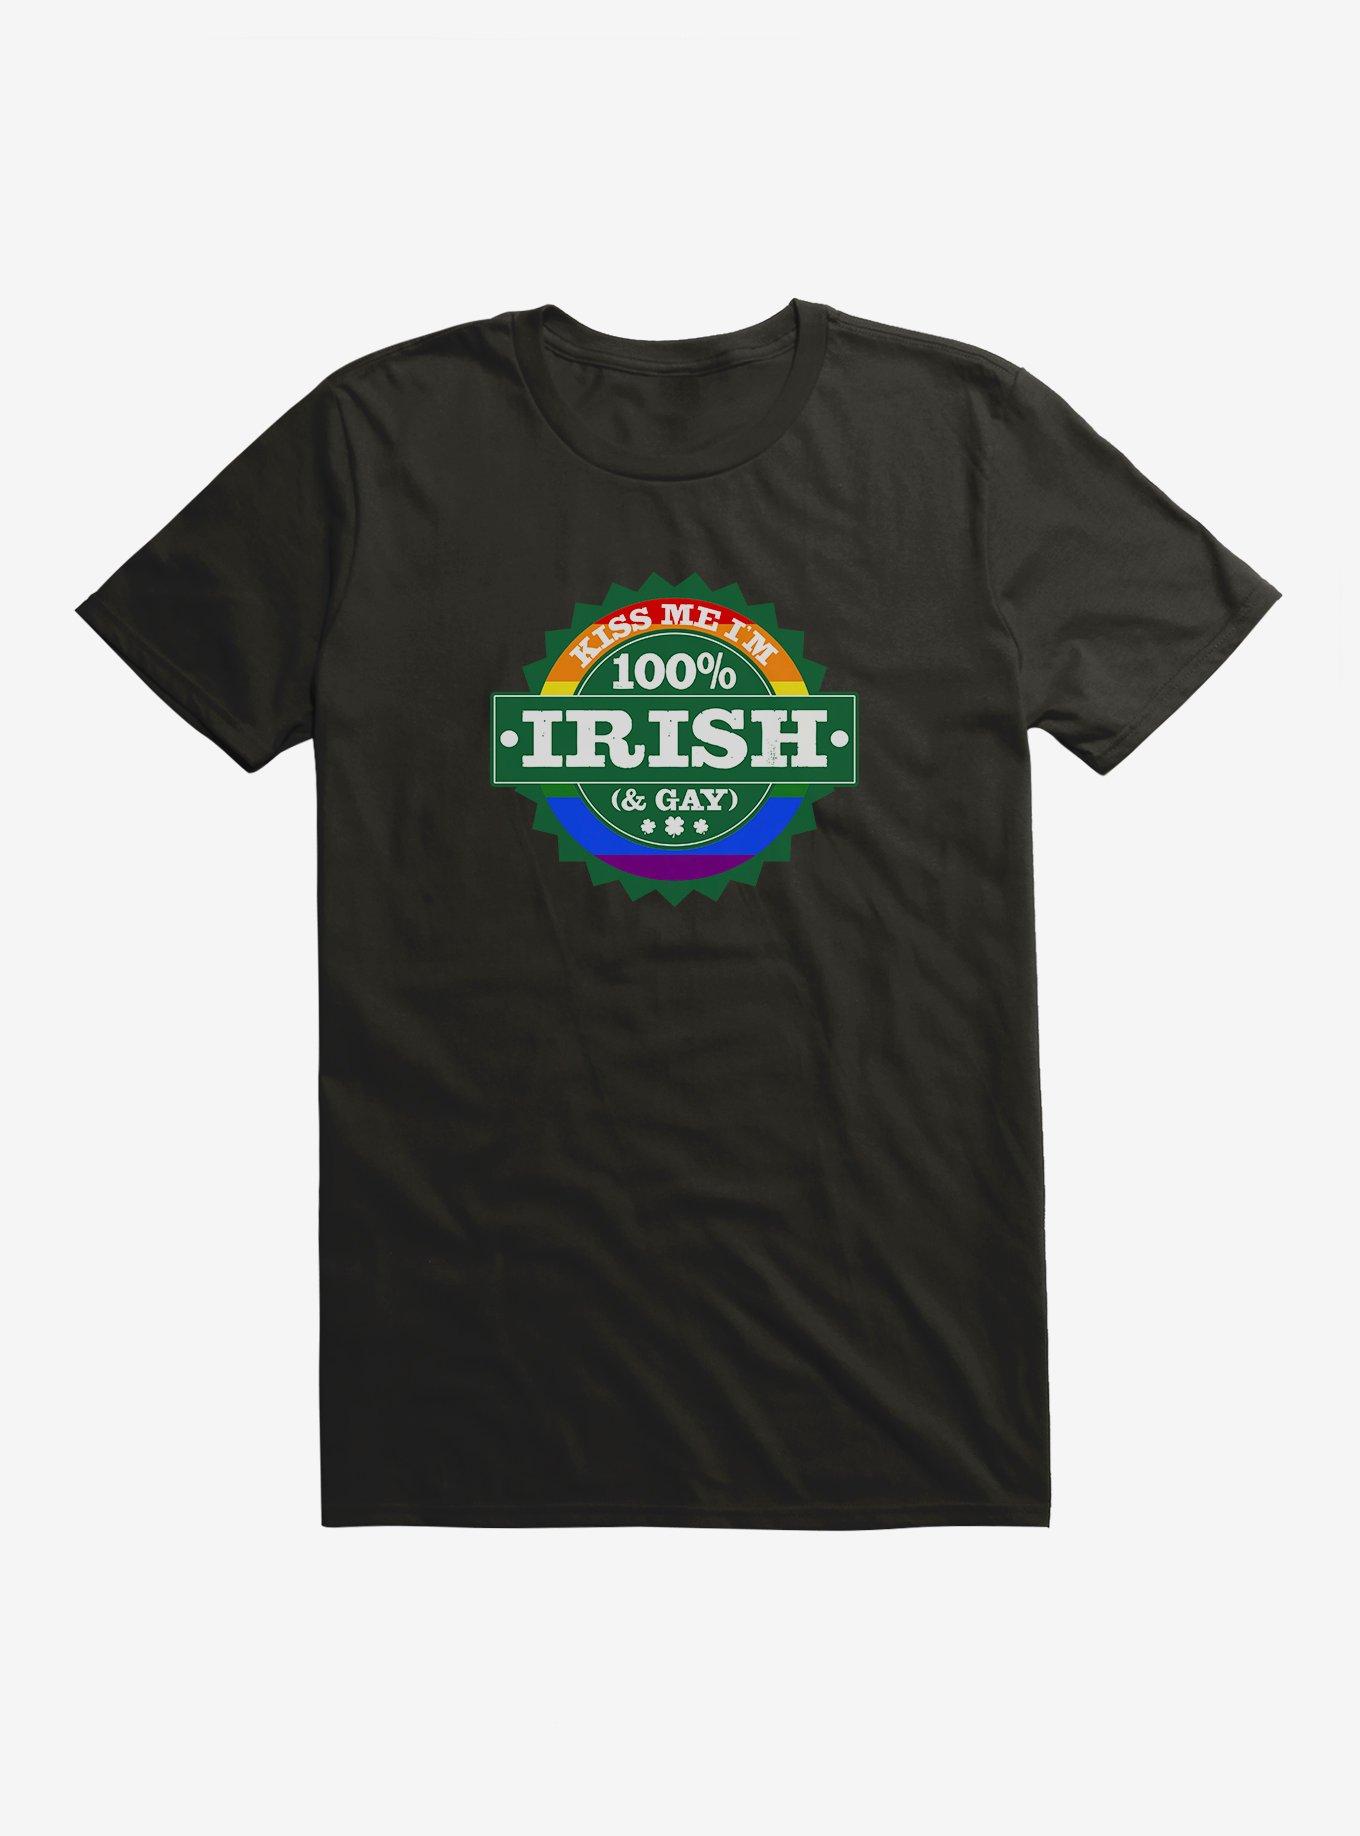 100% Irish And Gay! T-Shirt, BLACK, hi-res